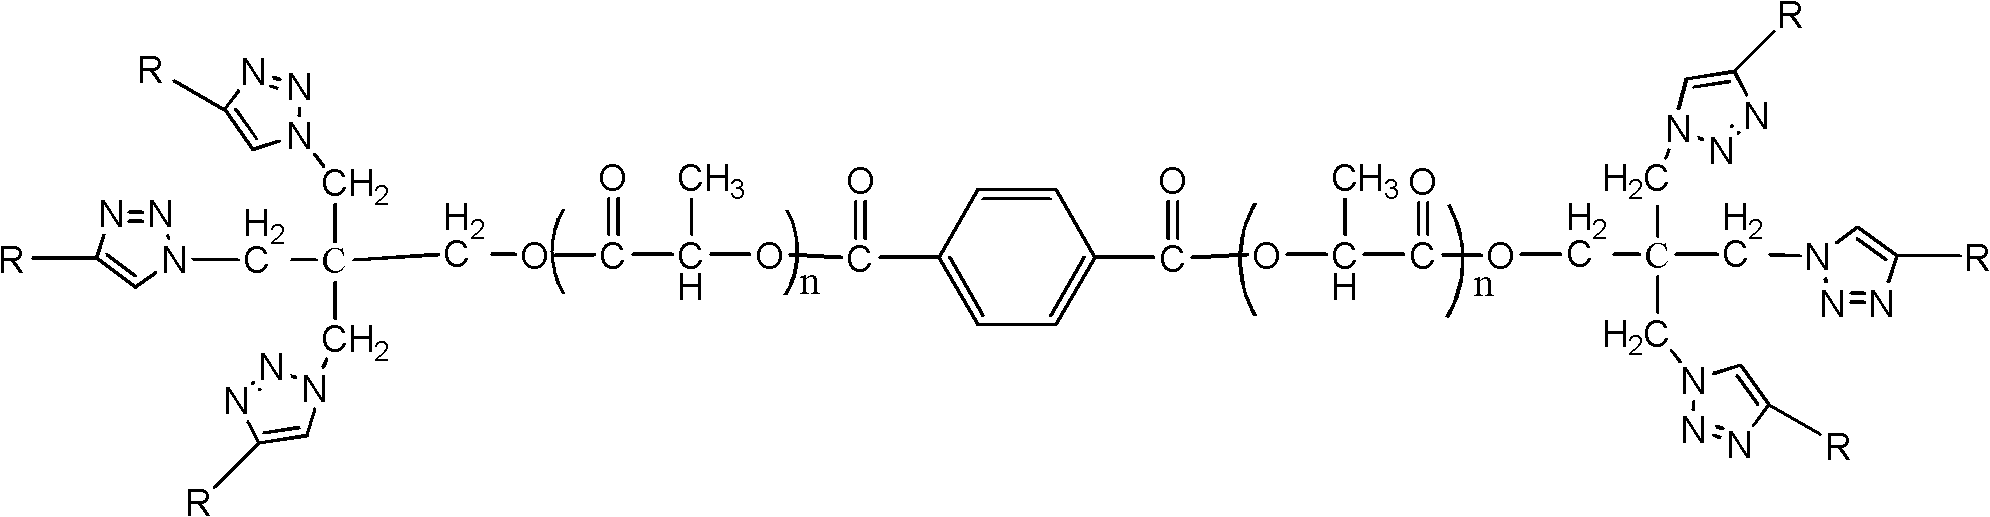 Two-arm hyperbranched star-shaped amphiphilic polylactic acid-poly 2-methacryloyloxyethyl phosphorylcholine block polymer and its preparation method